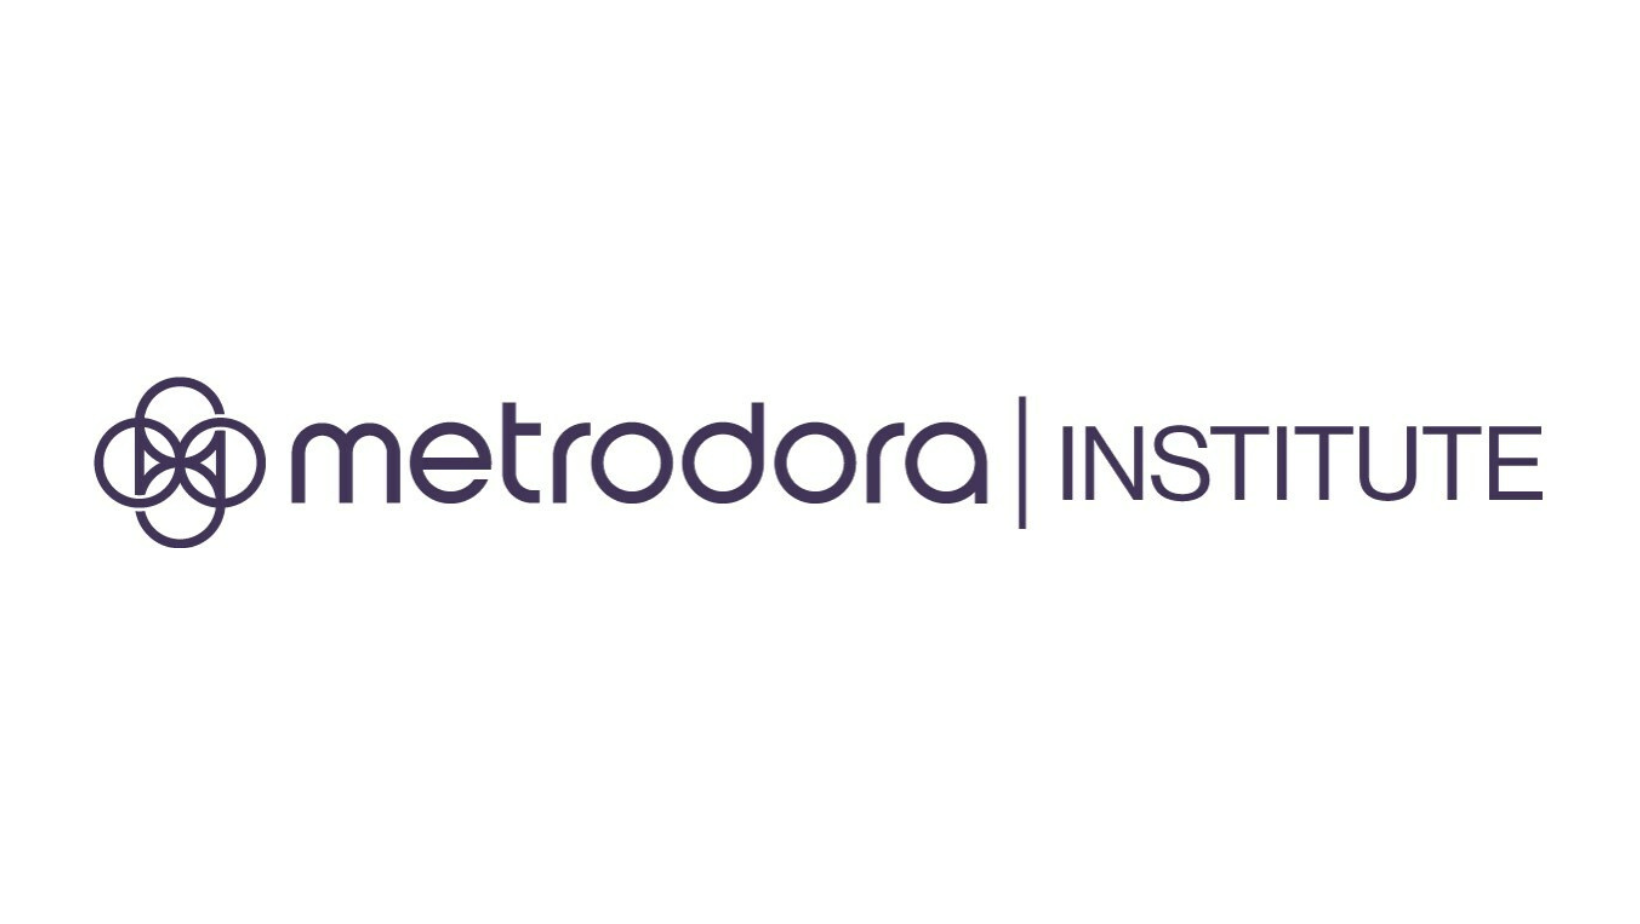 Metrodora's Image